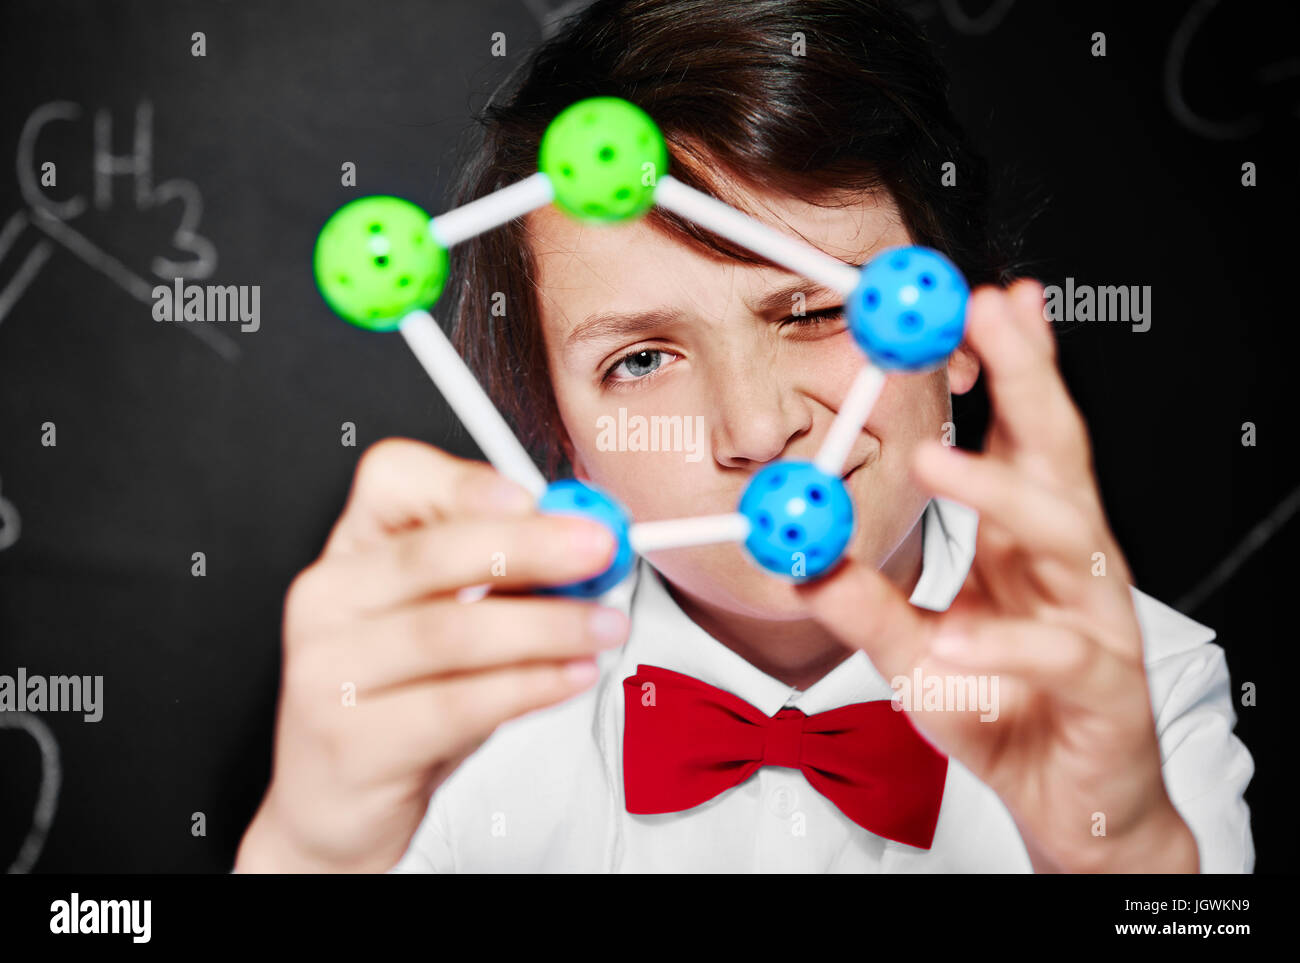 Small scientist analyzing molecule Stock Photo